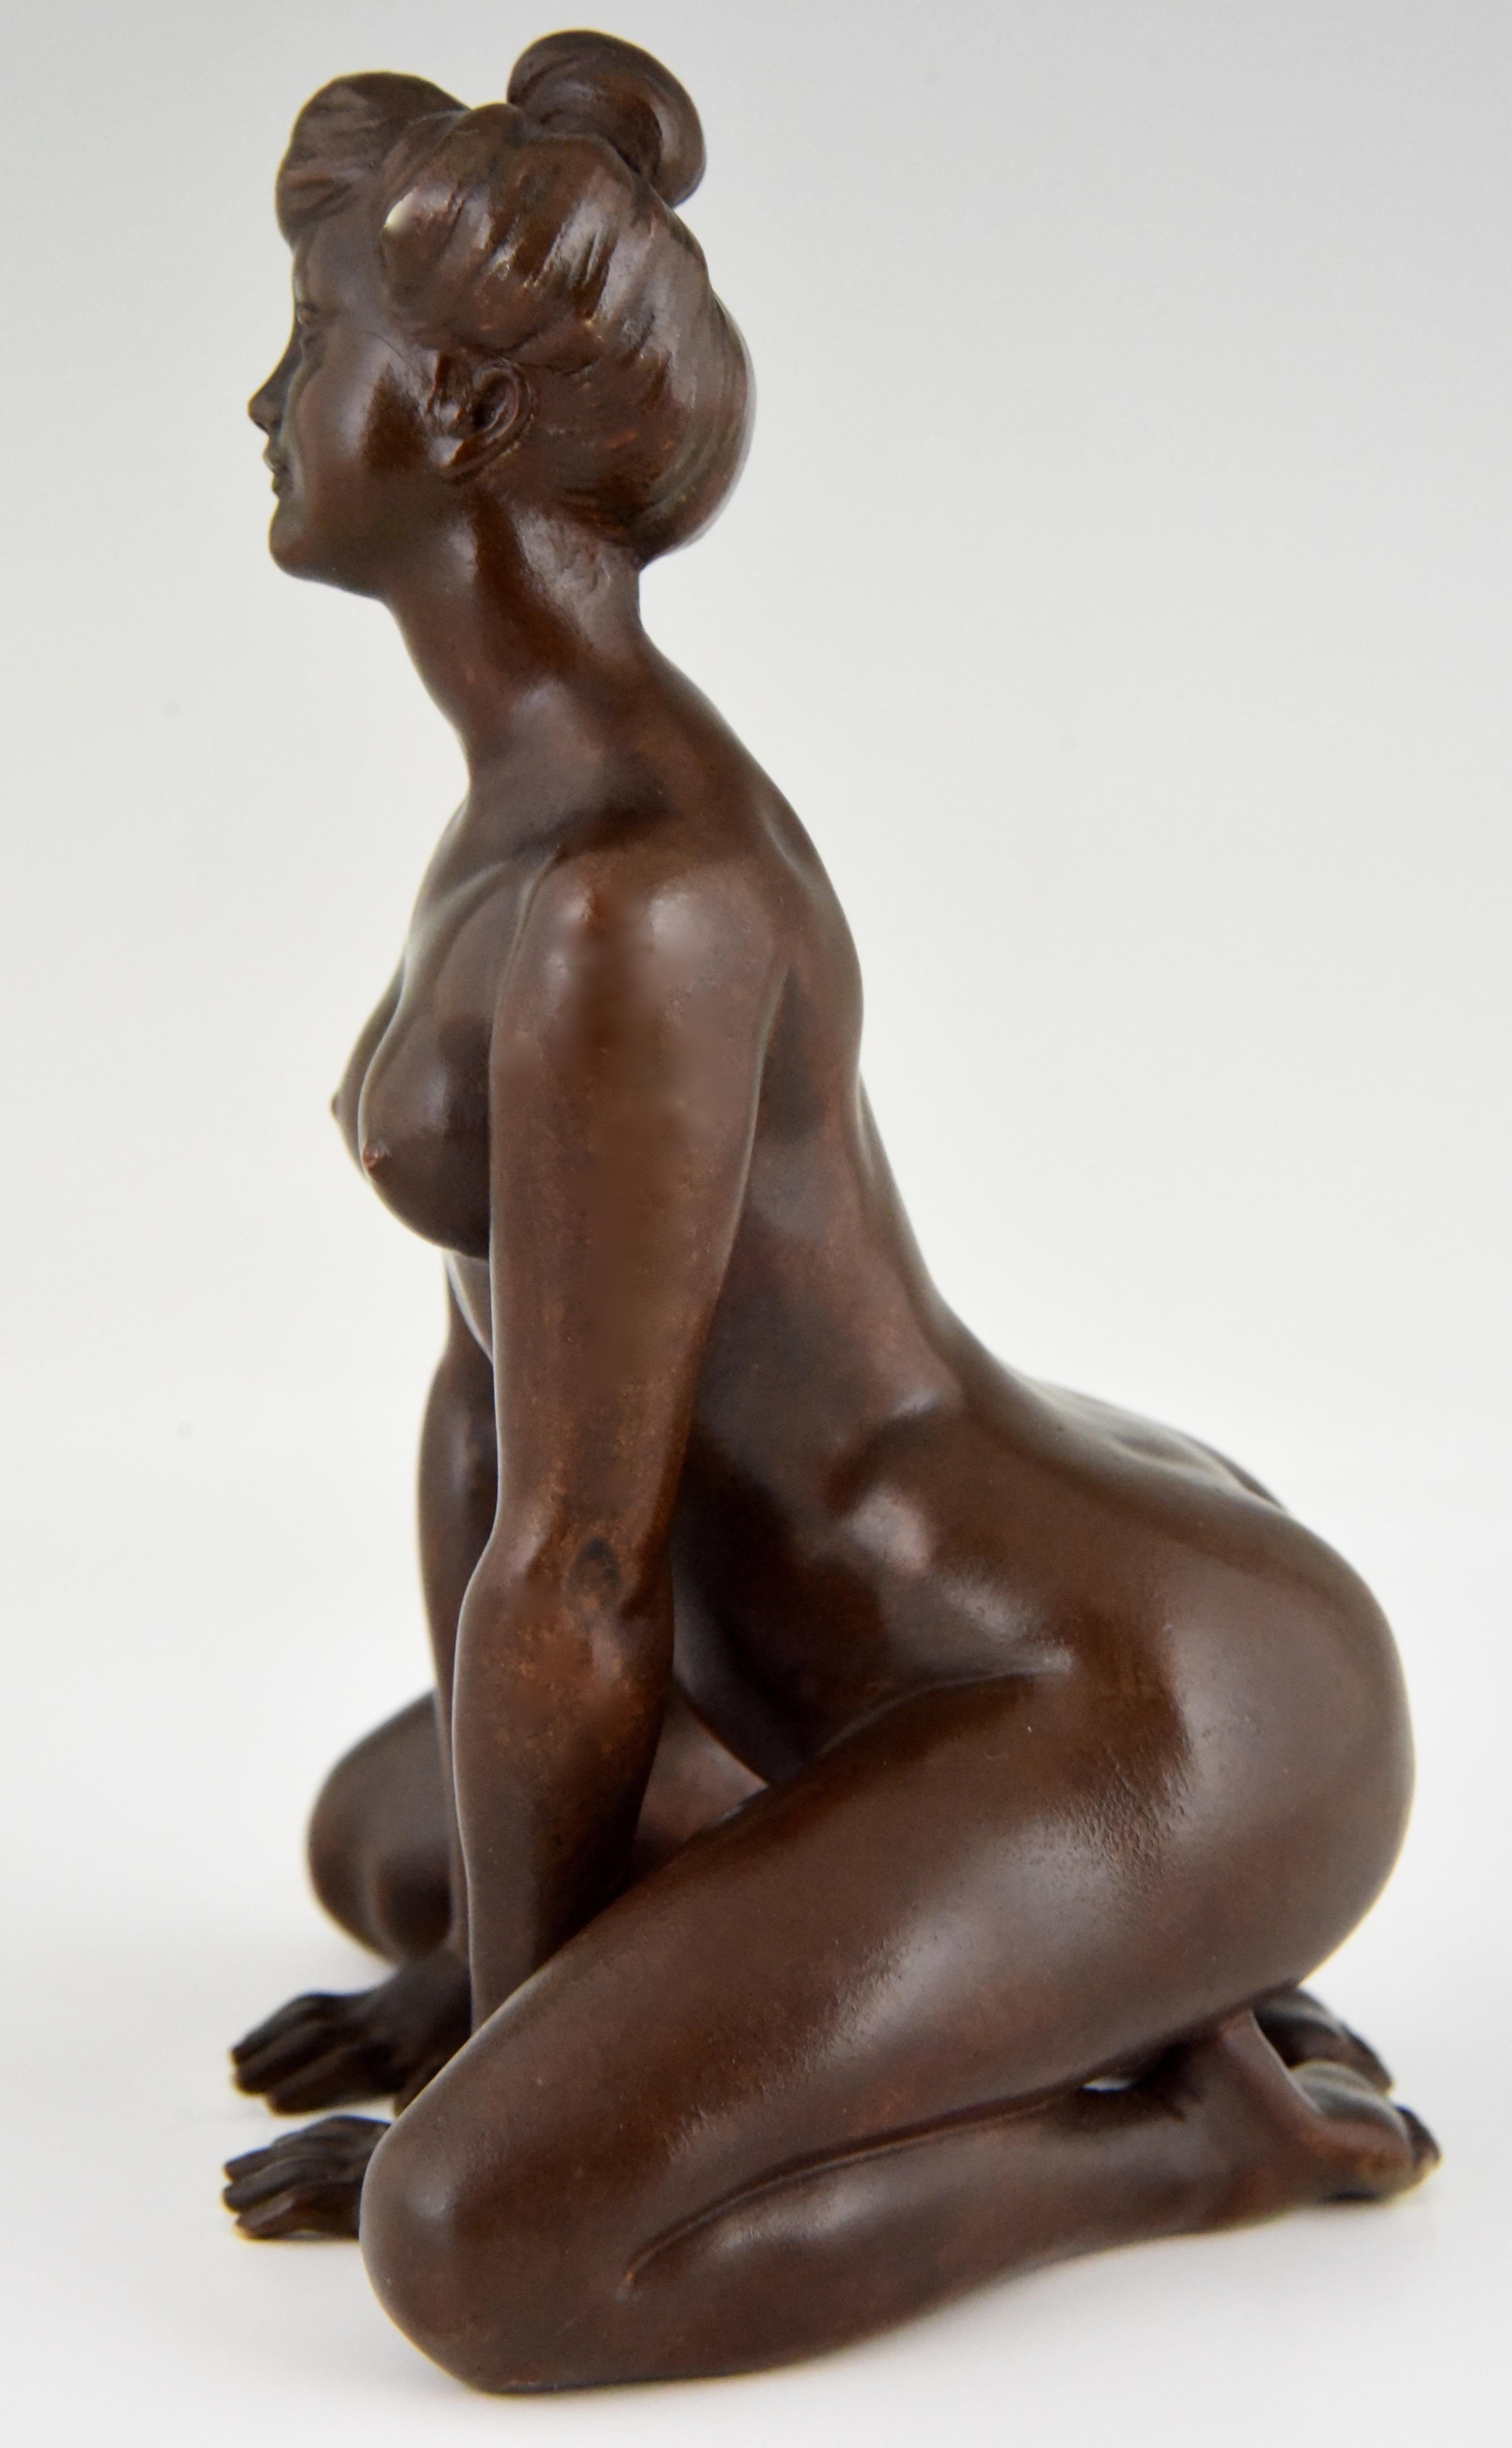 French Art Nouveau Erotic Bronze Sculpture of a Kneeling Nude Louis Chalon France 1900